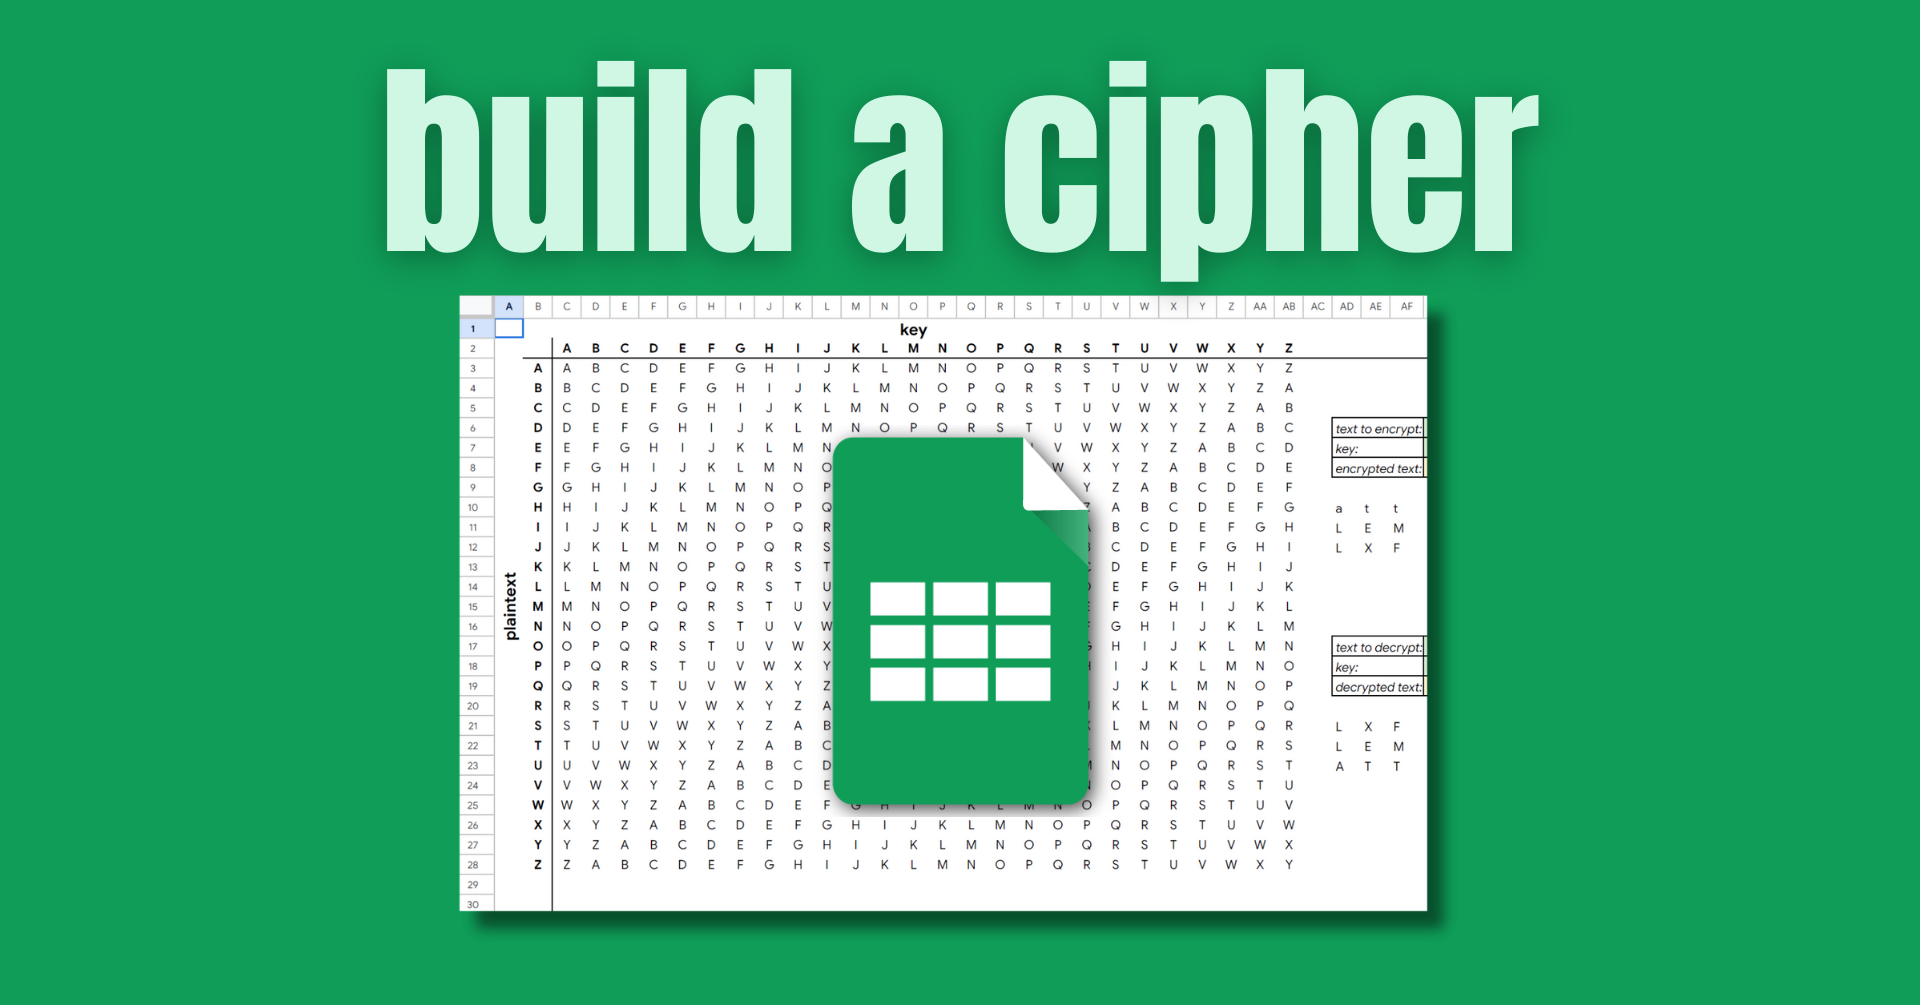 Image for Advanced Google Sheets Concepts – How to Build a Vigenère Cipher